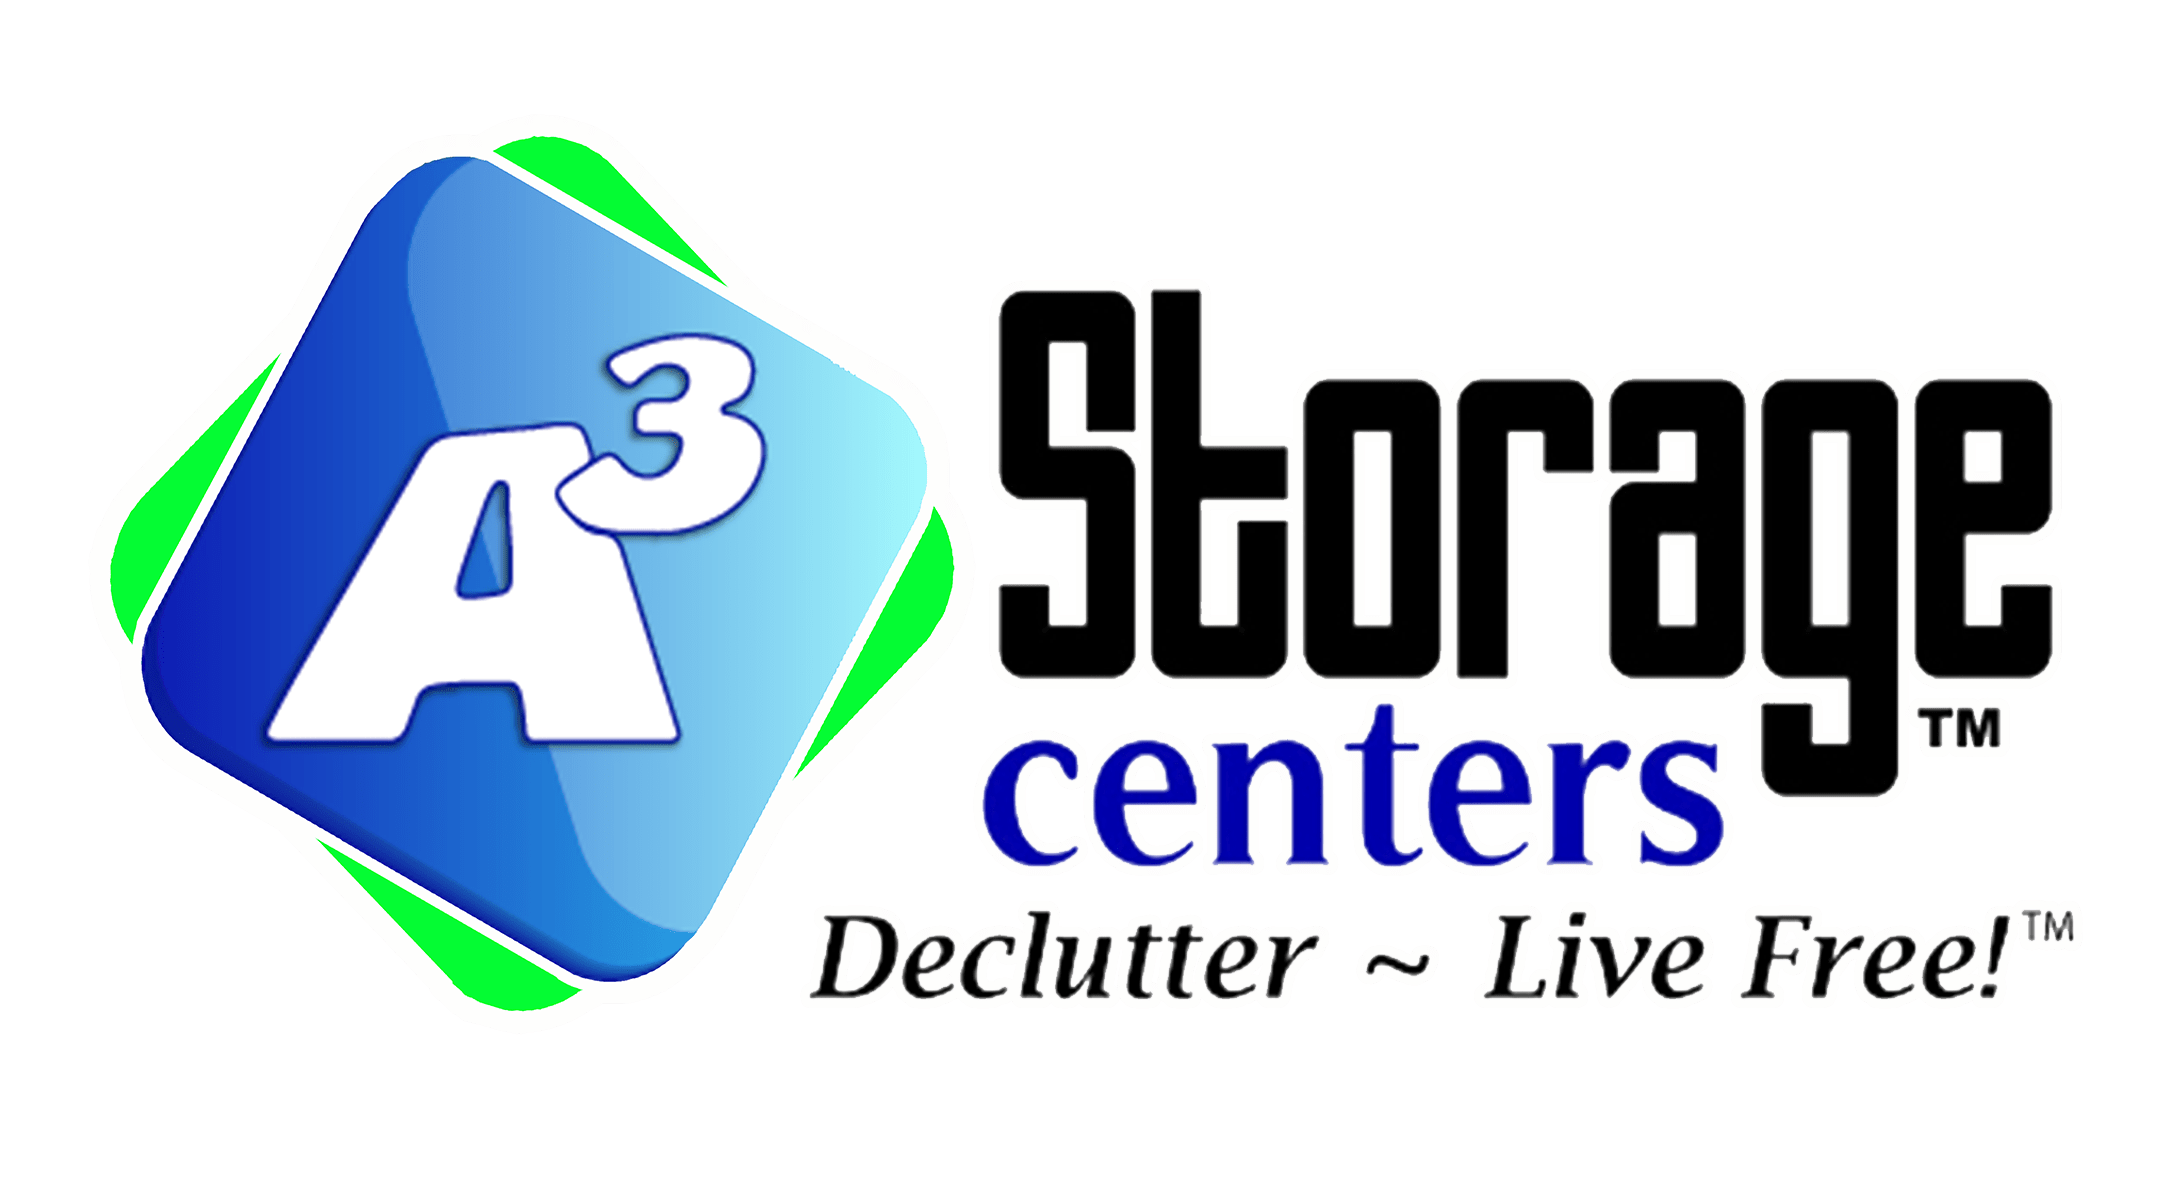 A3 Storage Centers